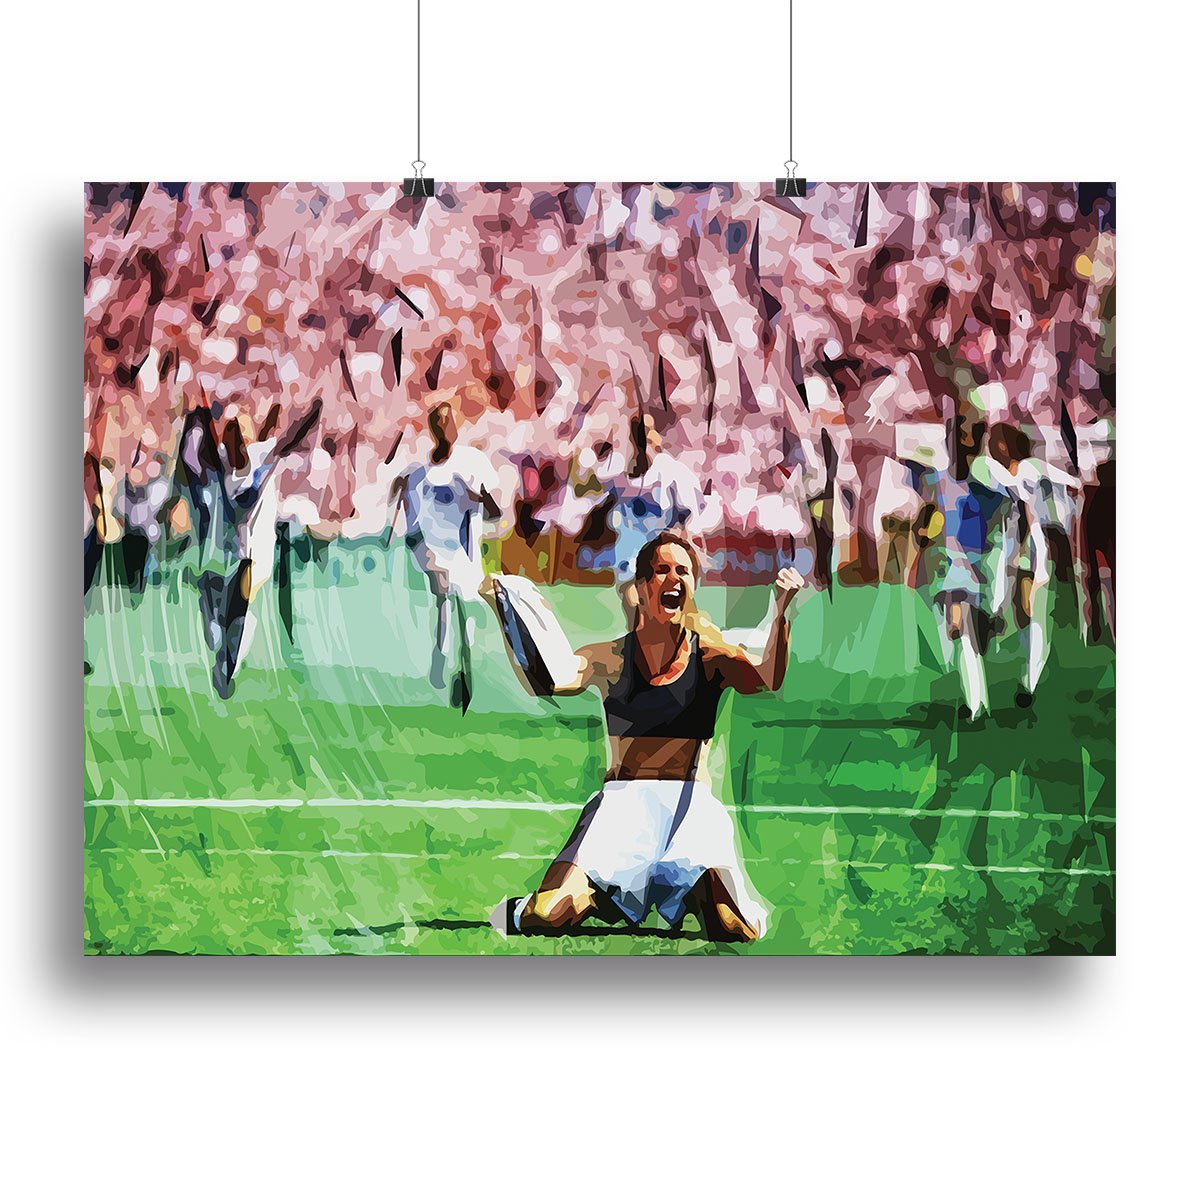 Brandi Chastain Celebrates USA Soccer 1999 Canvas Print or Poster